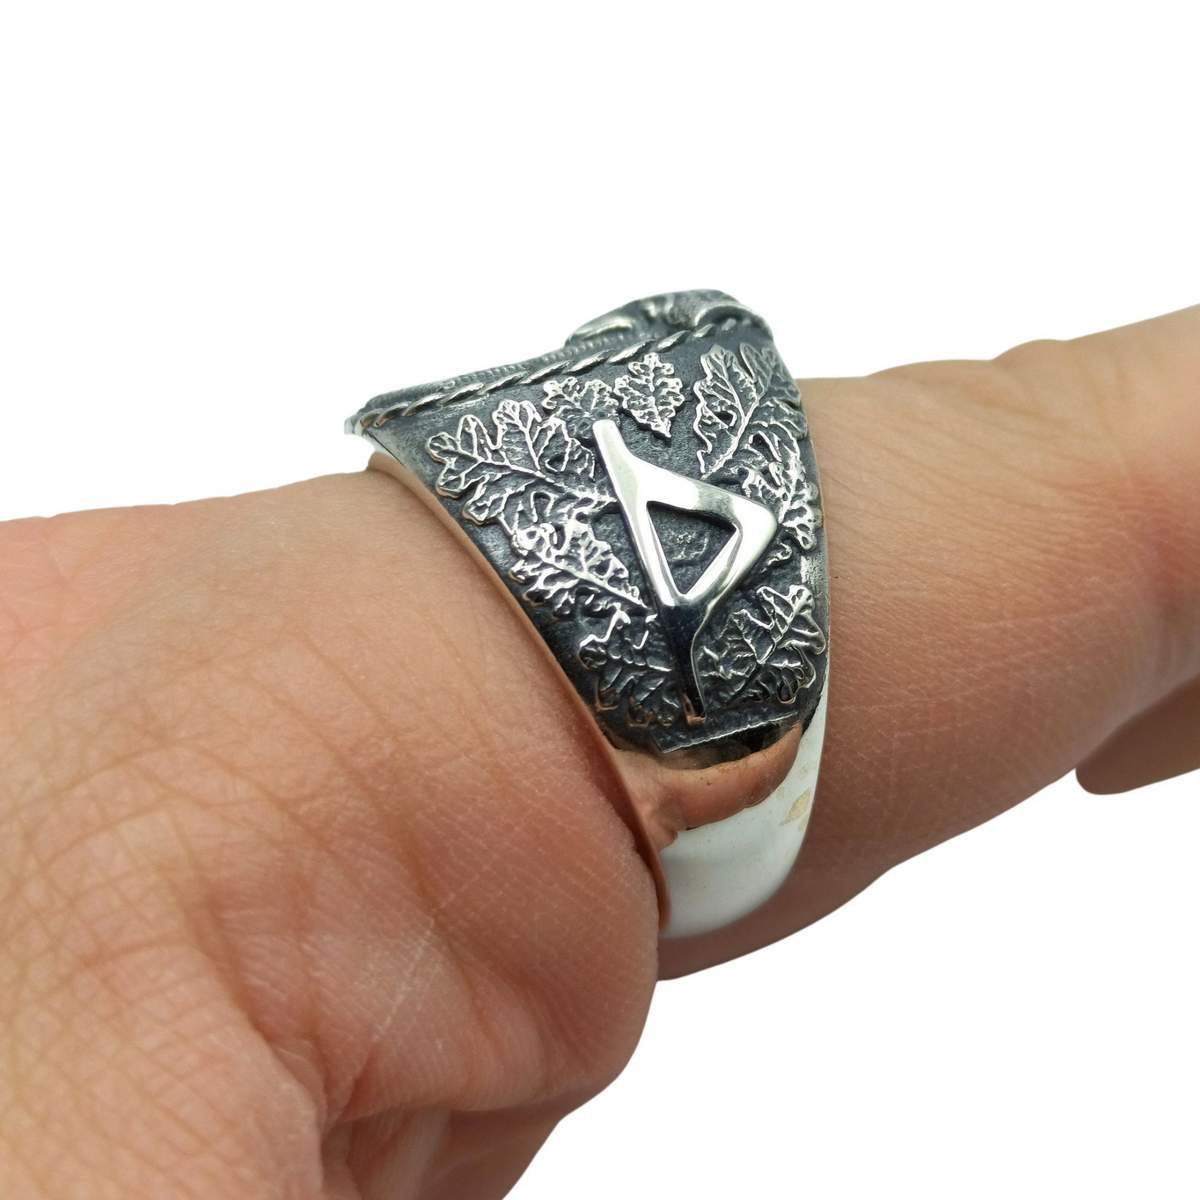 Mjolnir silver signet ring